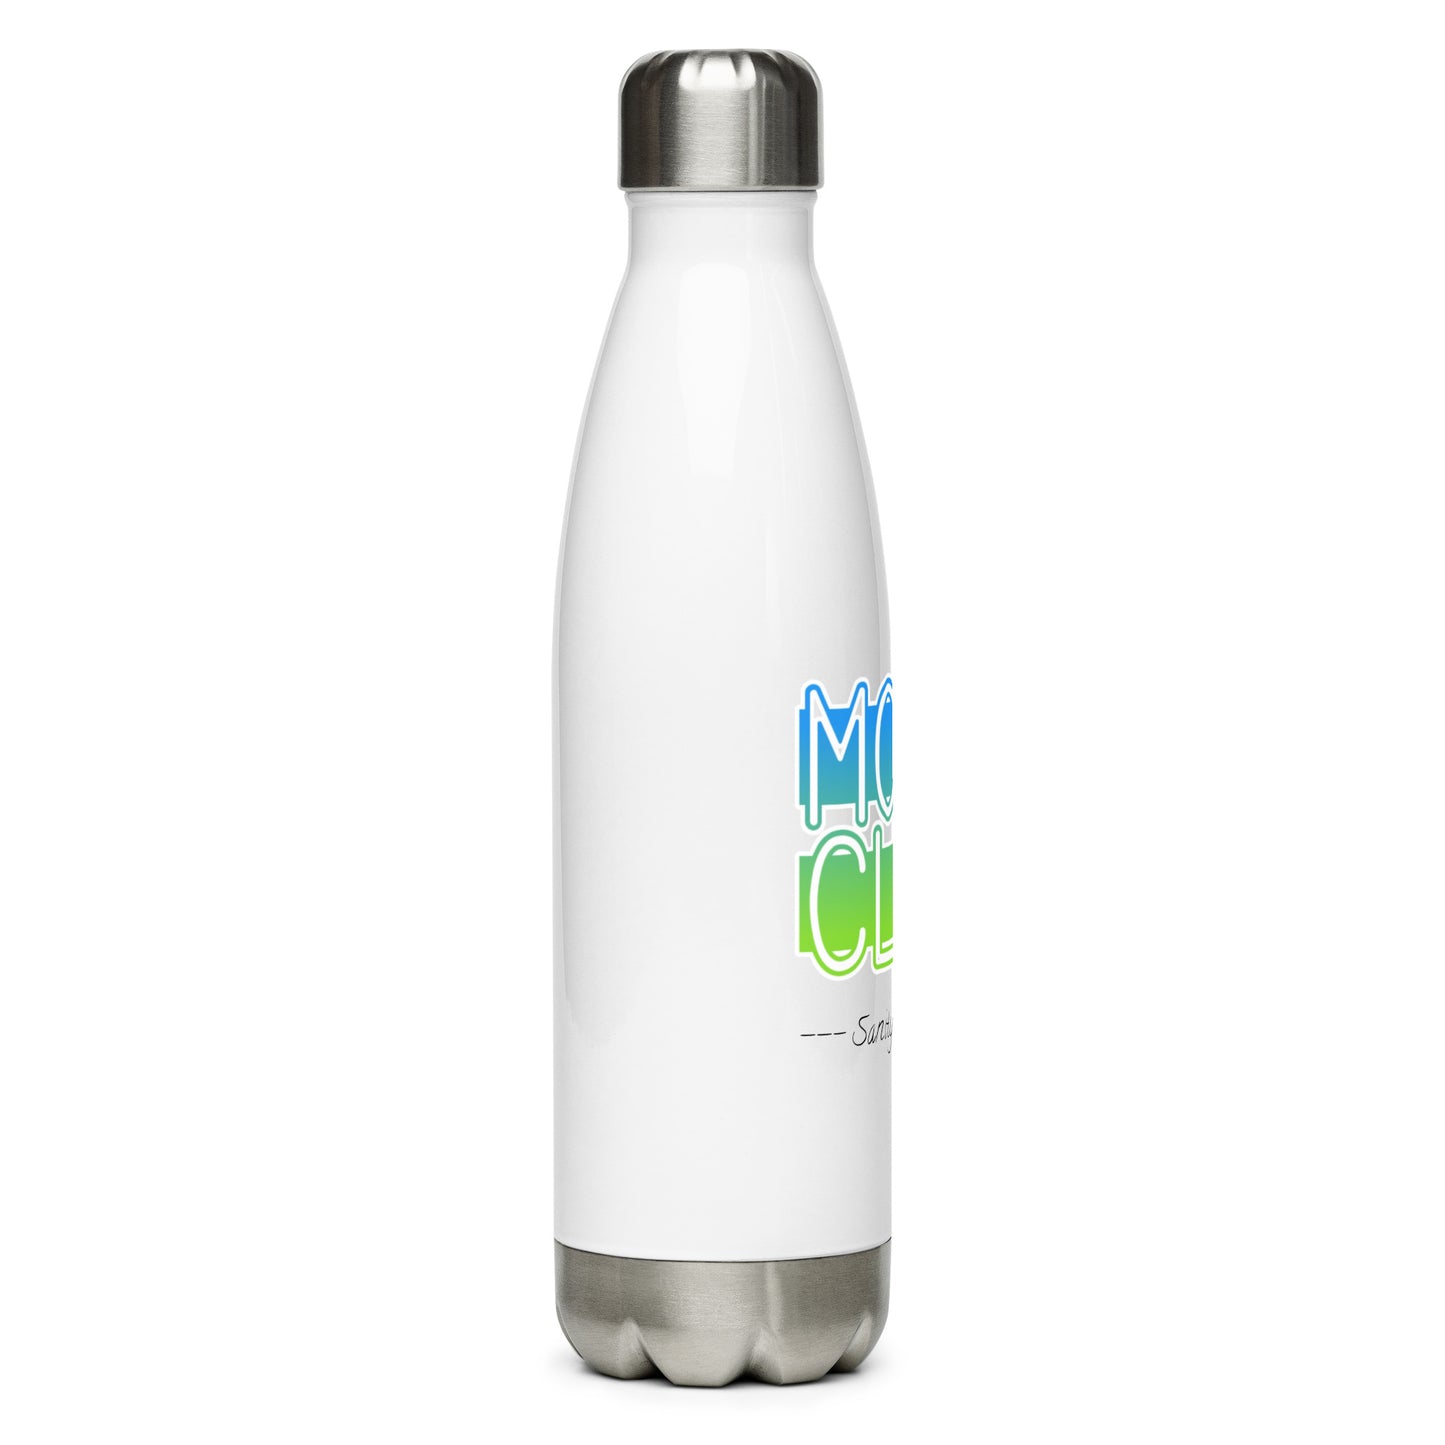 Moms Club -Sanity Optional Stainless Steel Water Bottle (blue-green)